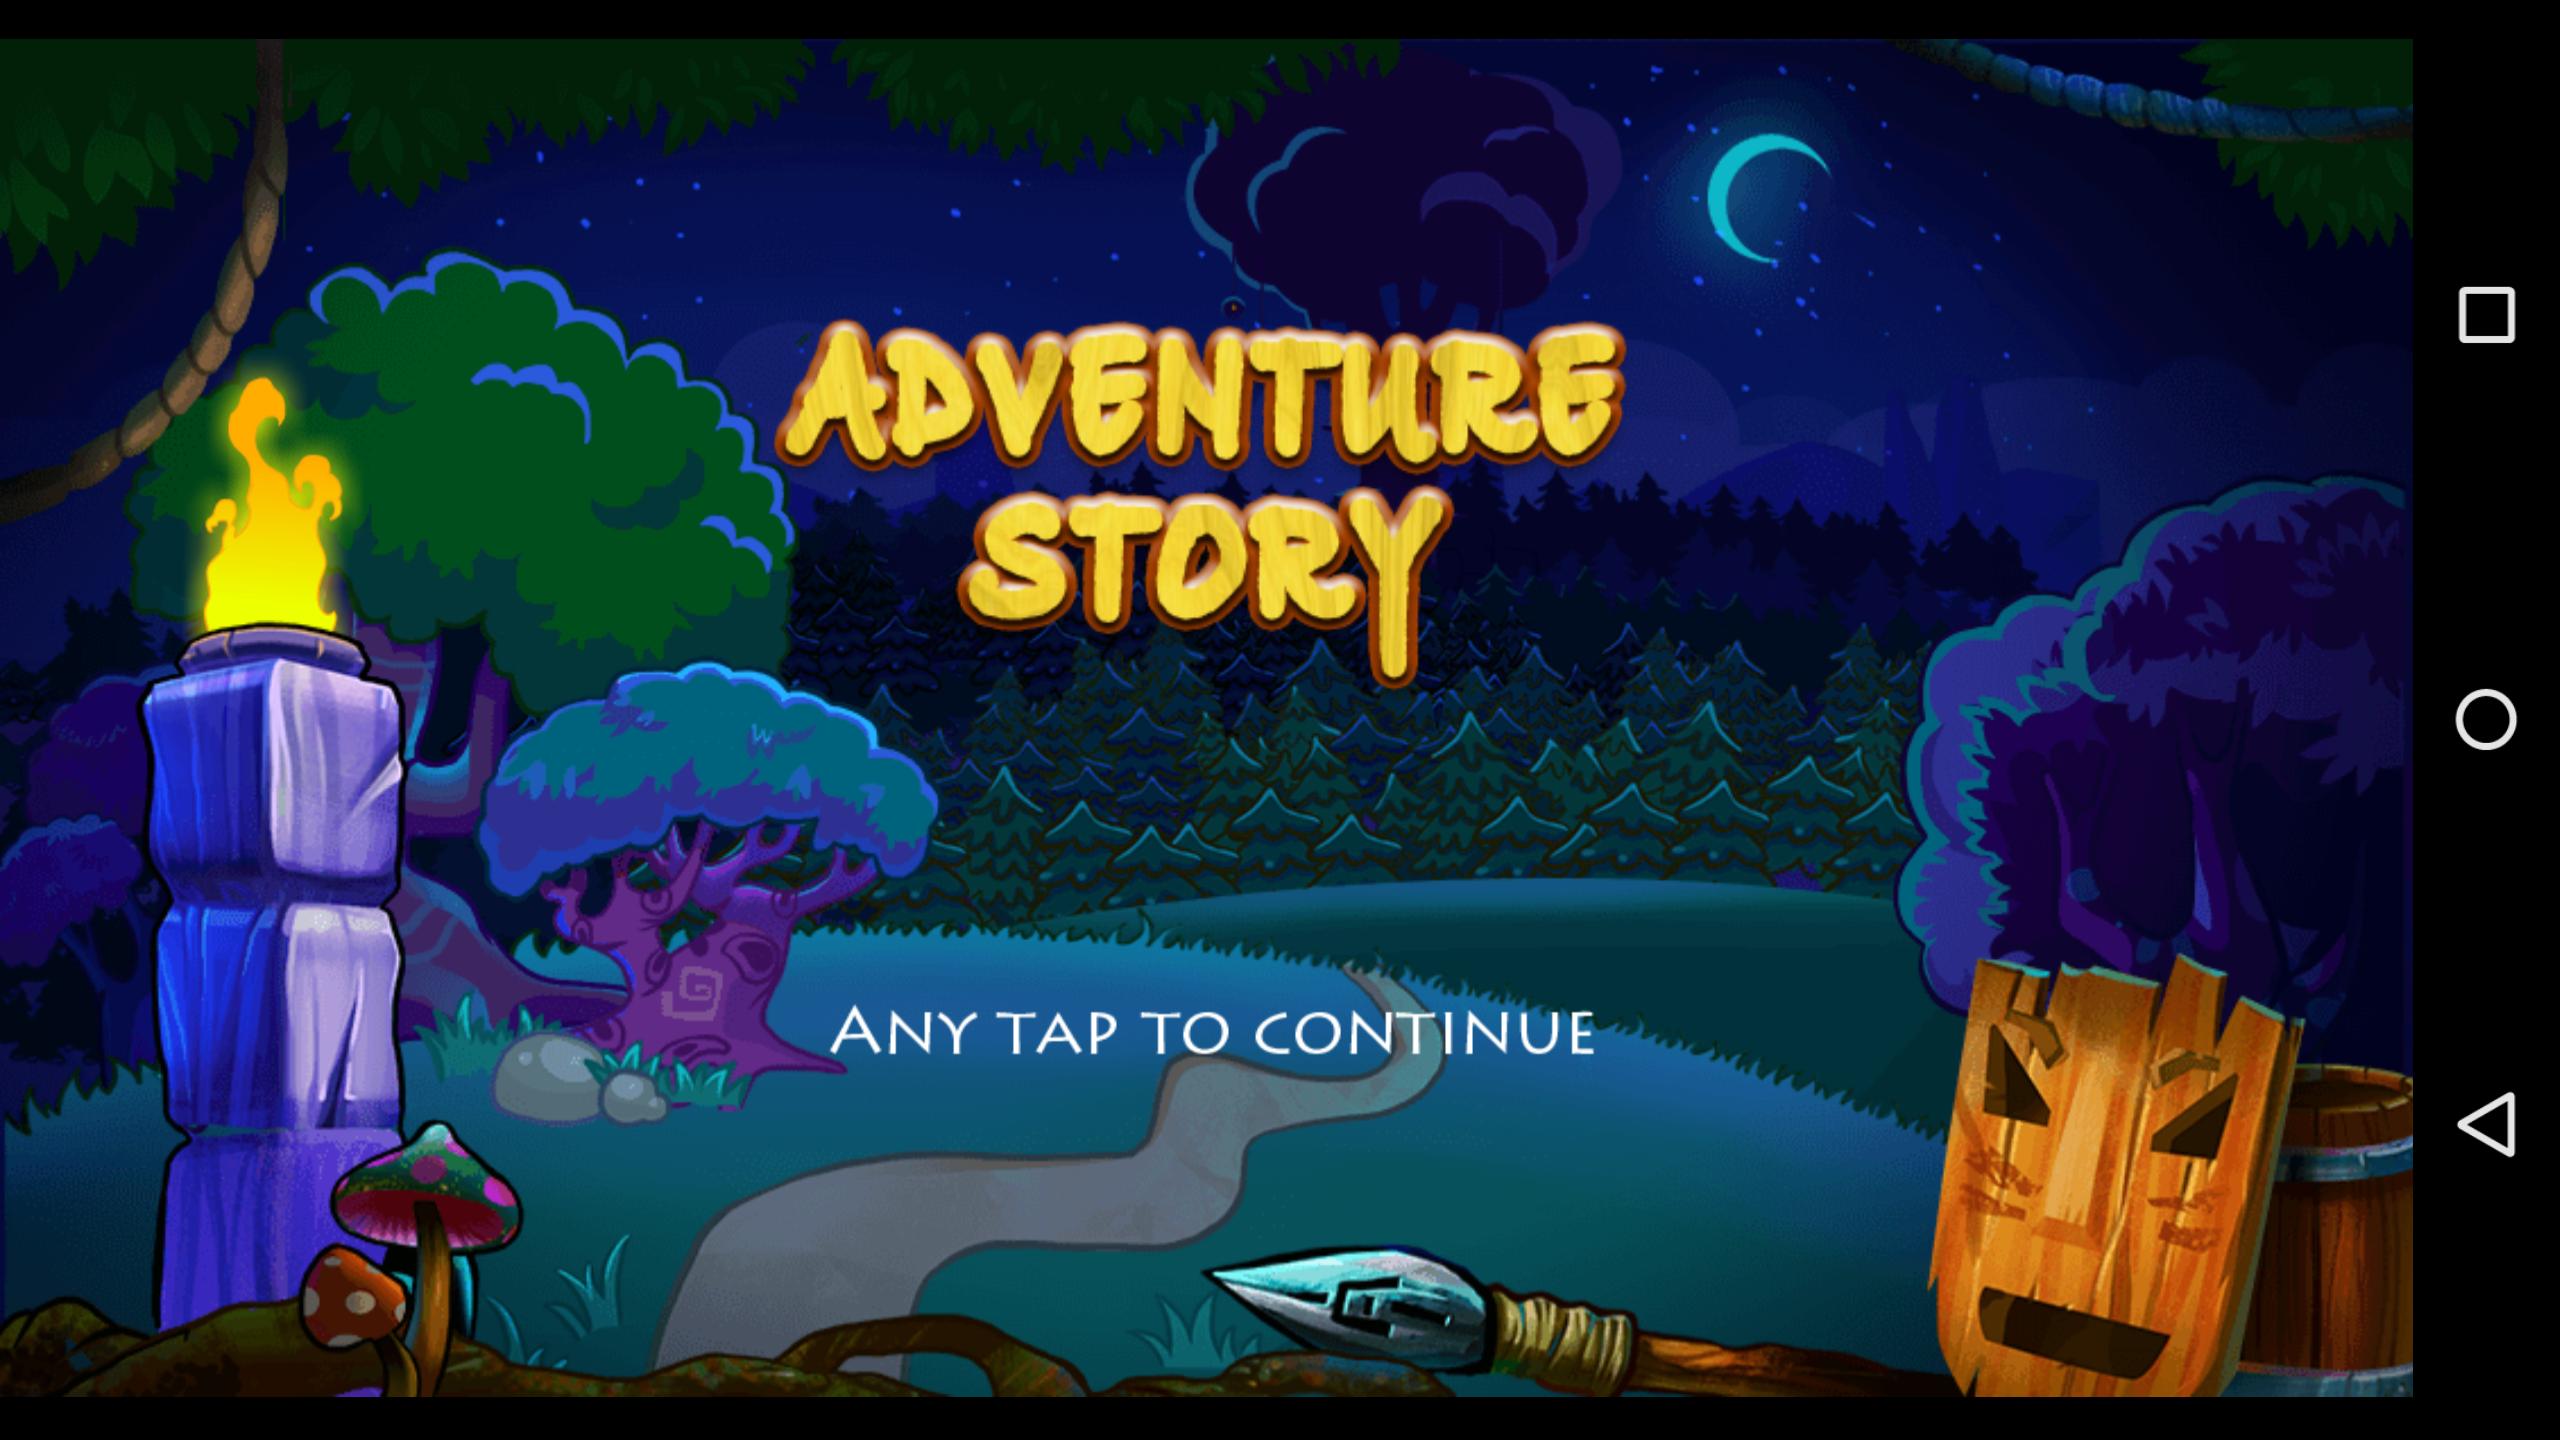 Adventure story writing